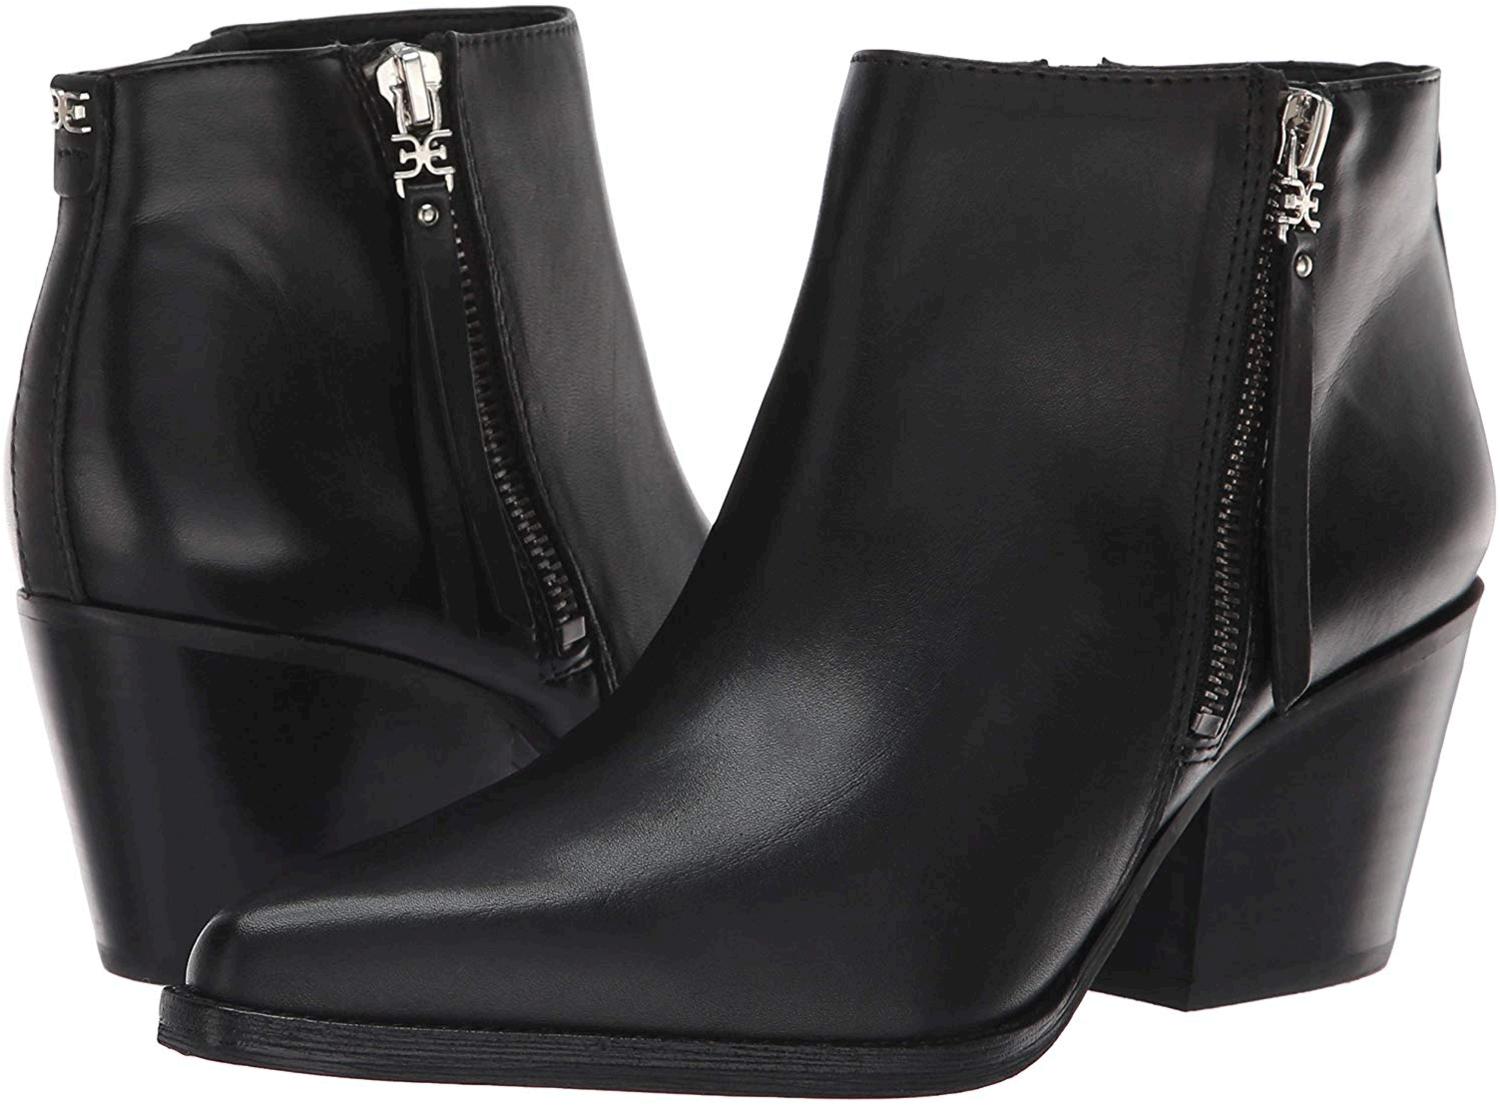 Sam Edelman Women's Walden Ankle Boot, Black Leather, Size 8.5 zKRb | eBay